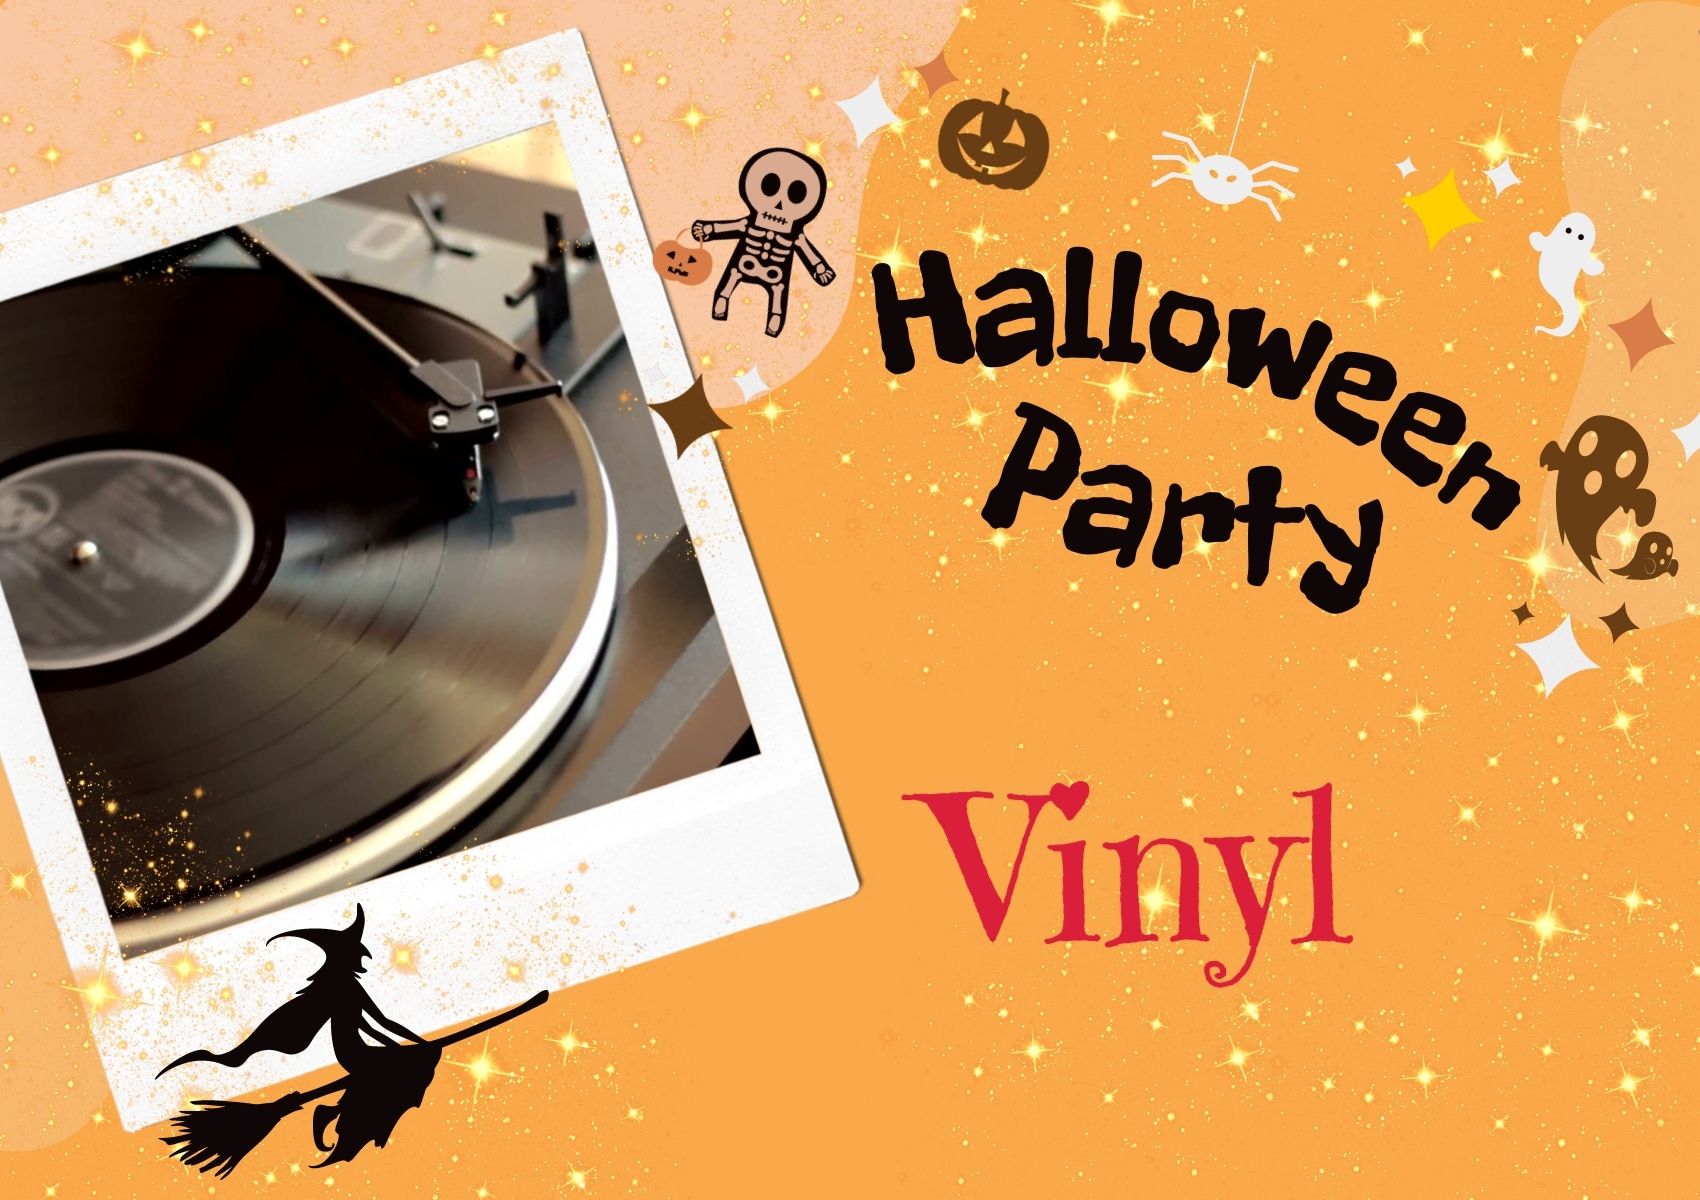 "Vinyl" Halloween Party 2022